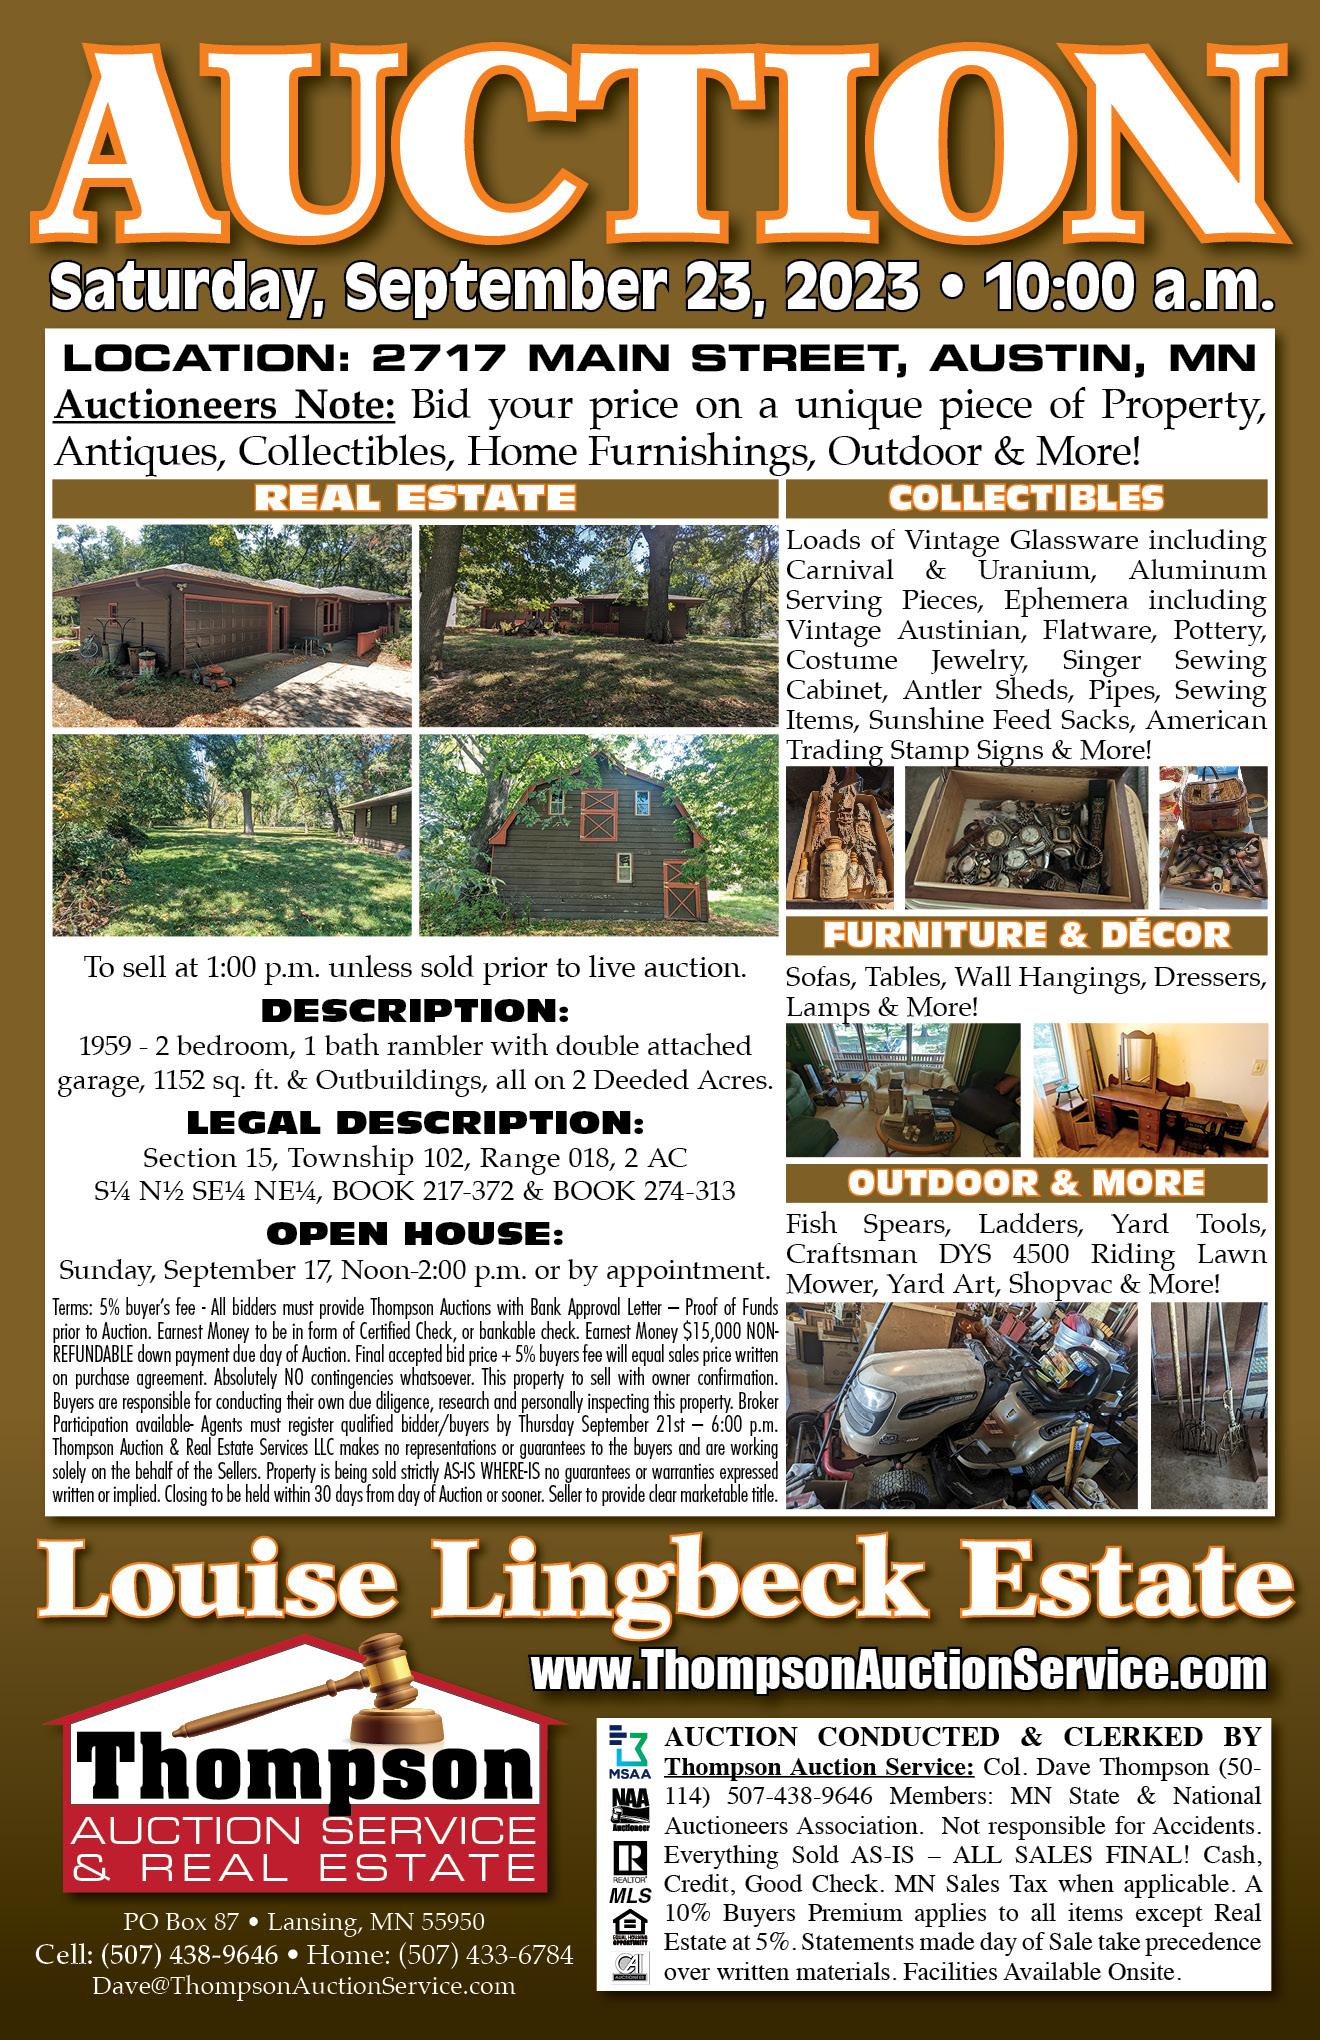 Louise Lingbeck Estate Auction - Live